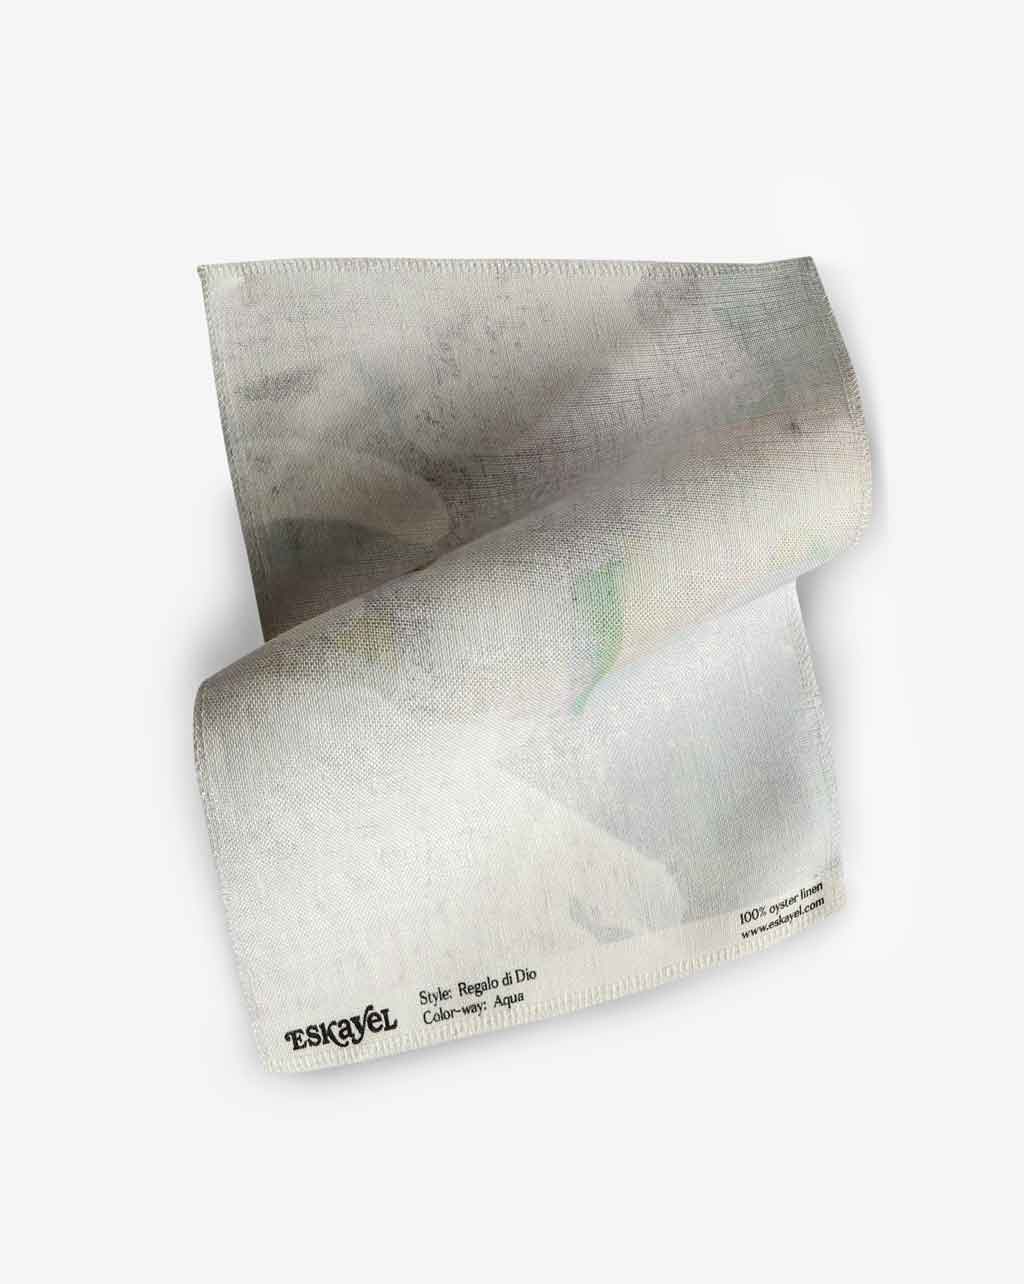 A white napkin on a Regalo di Dio Fabric Aqua surface